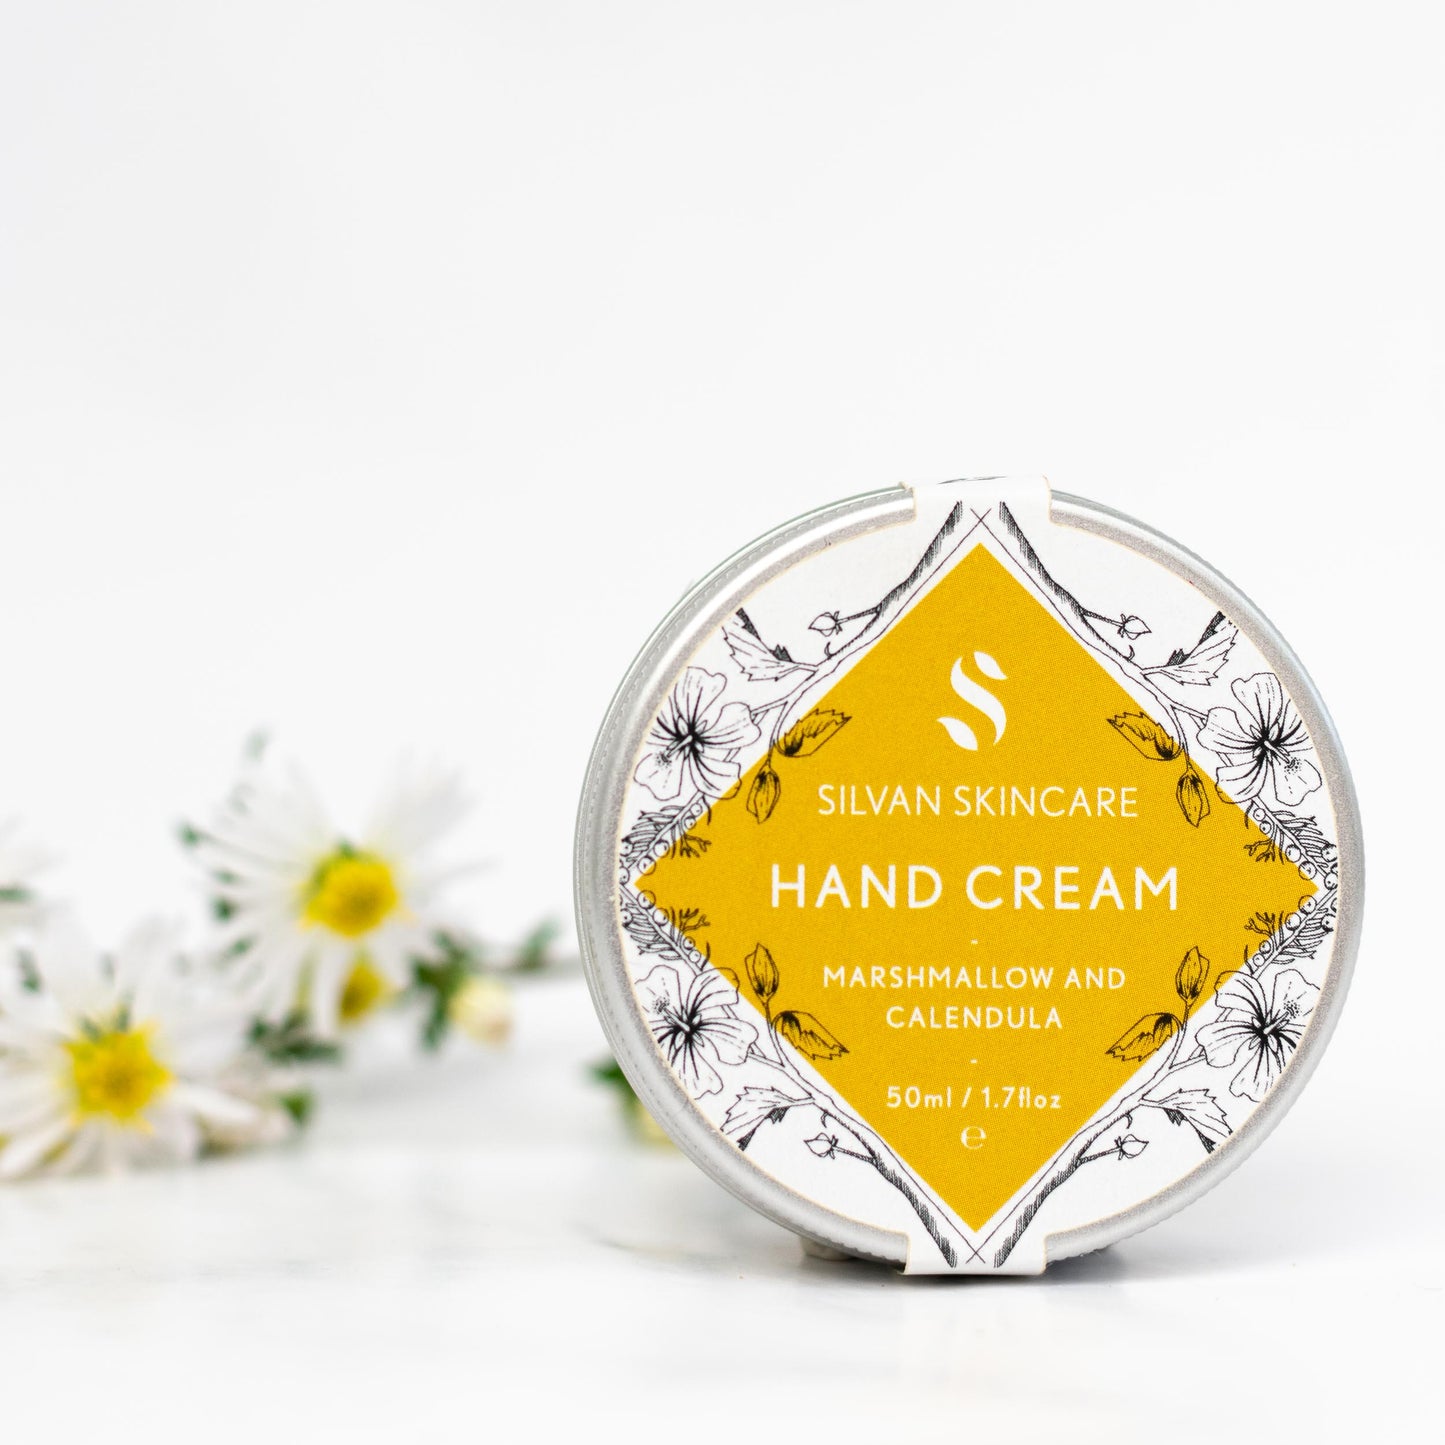 Hand Cream with Marshmallow and Calendula